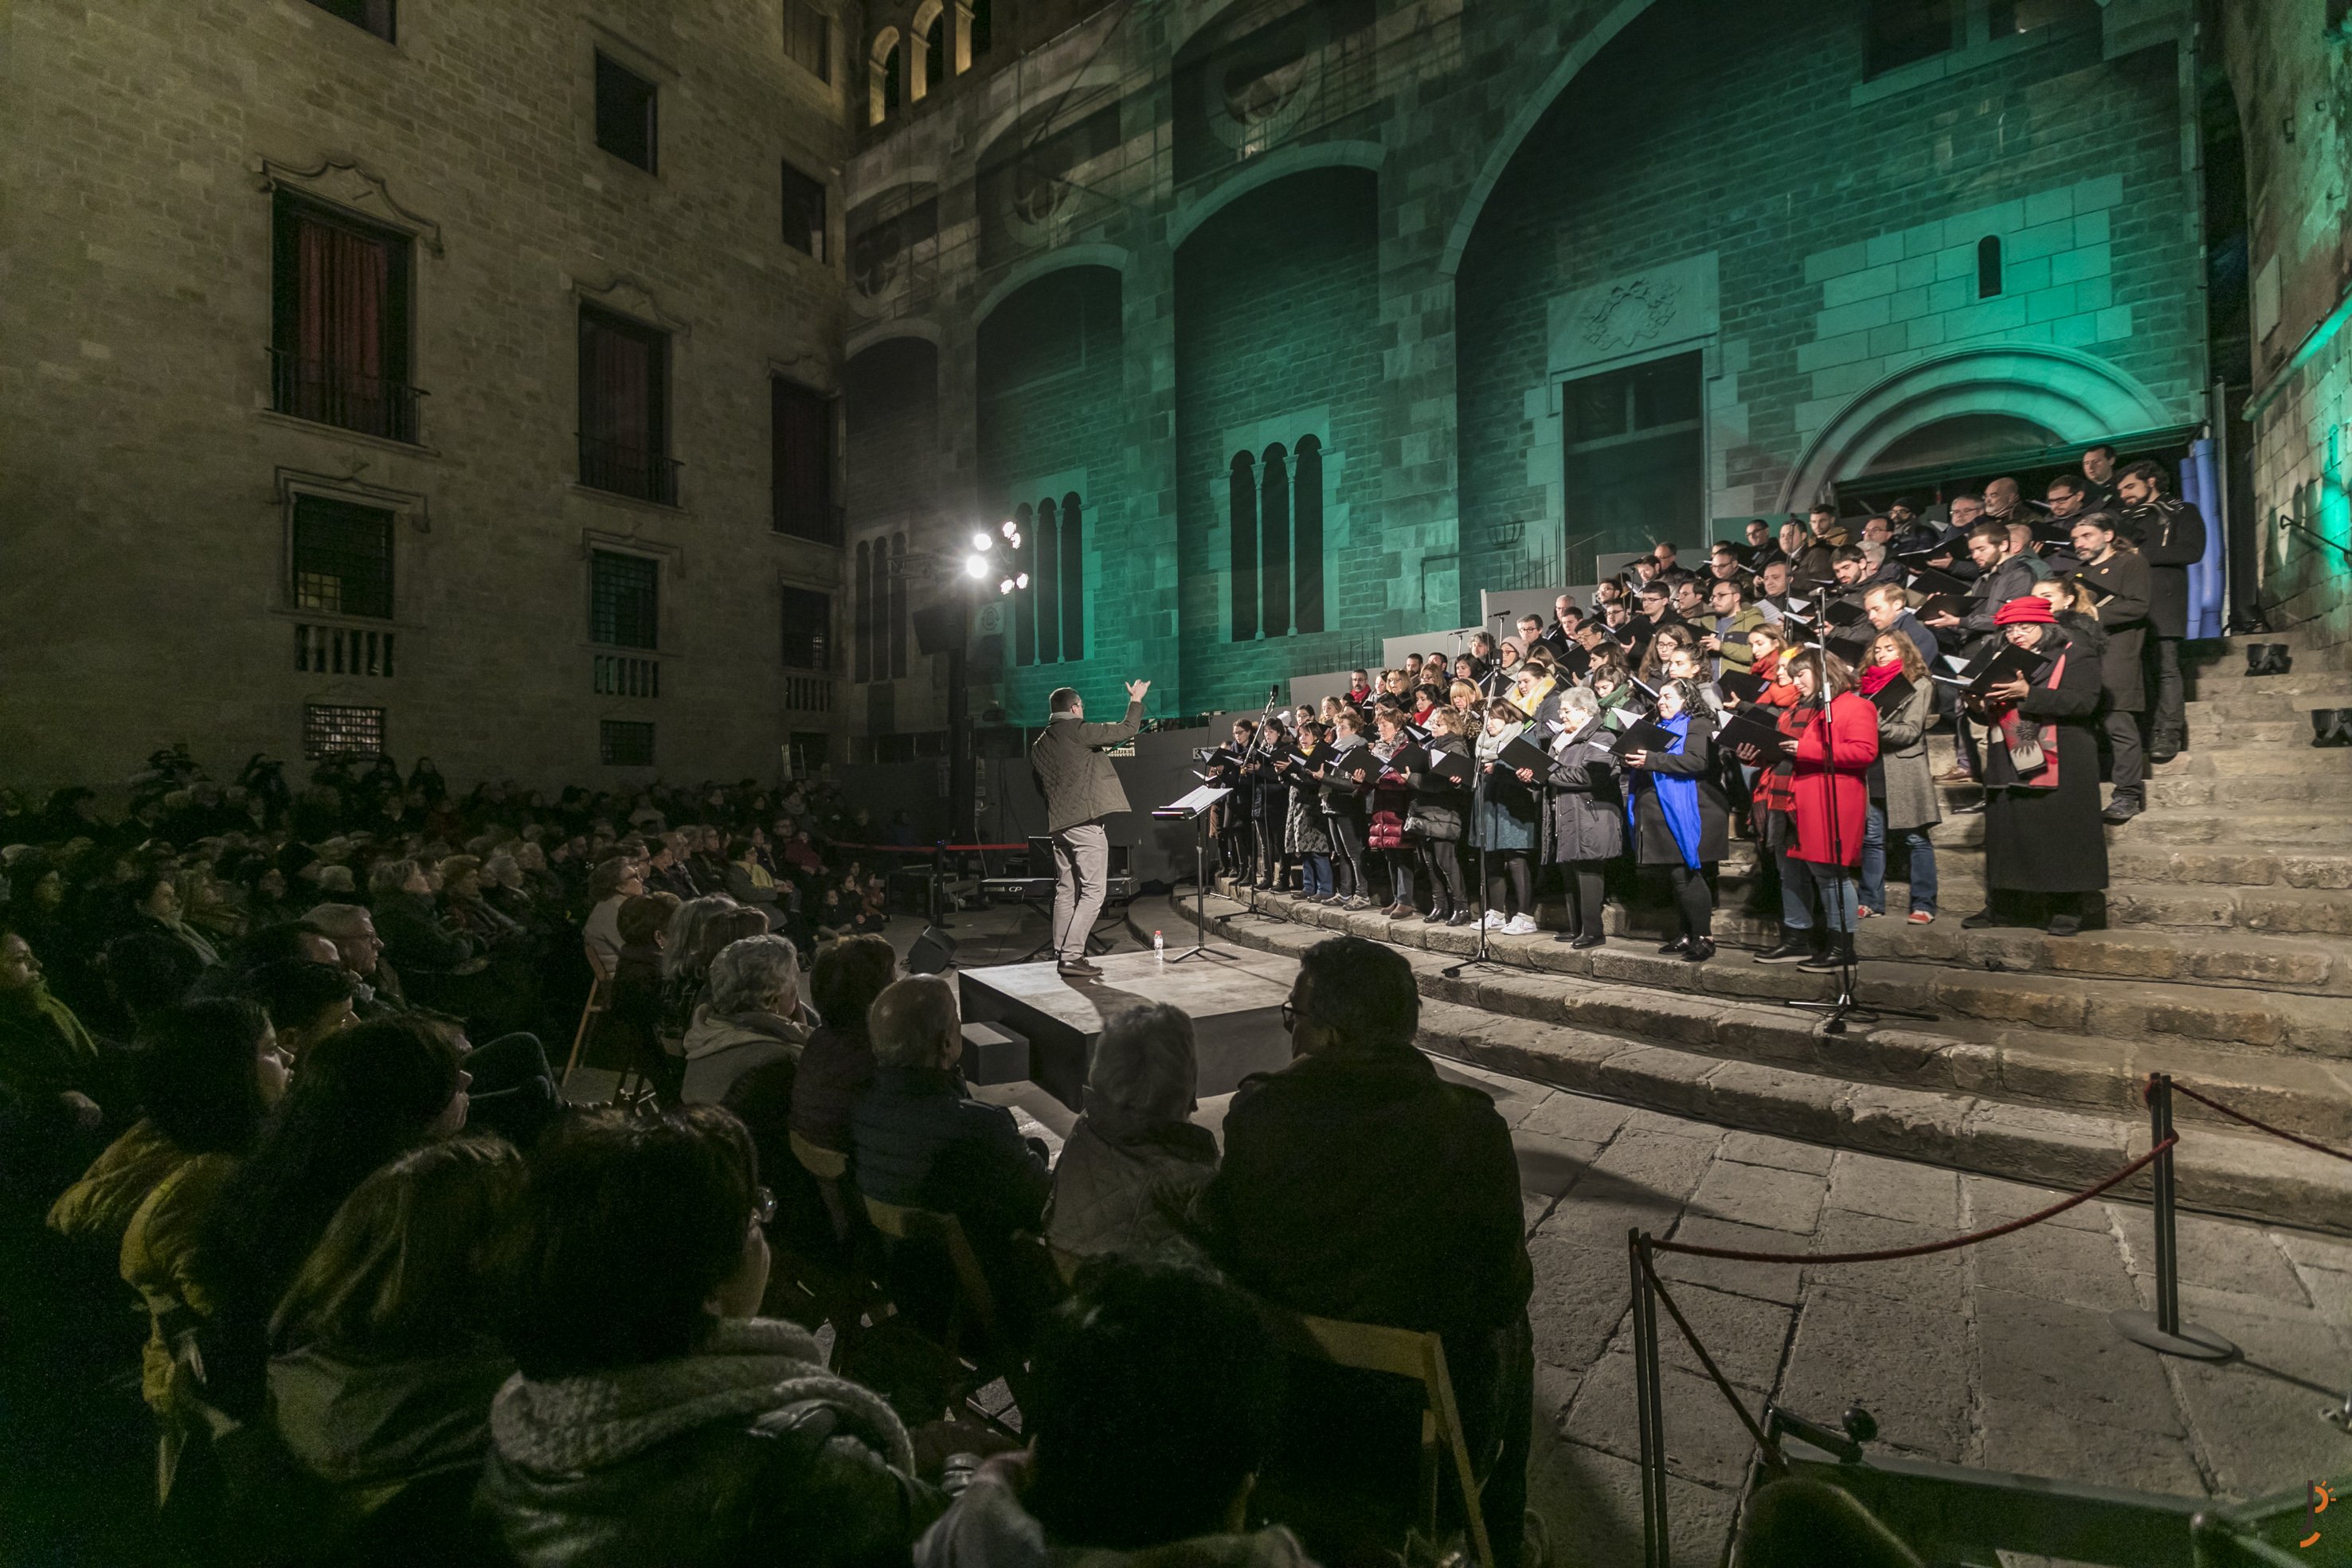 concert plaça del rei Orfeó Català